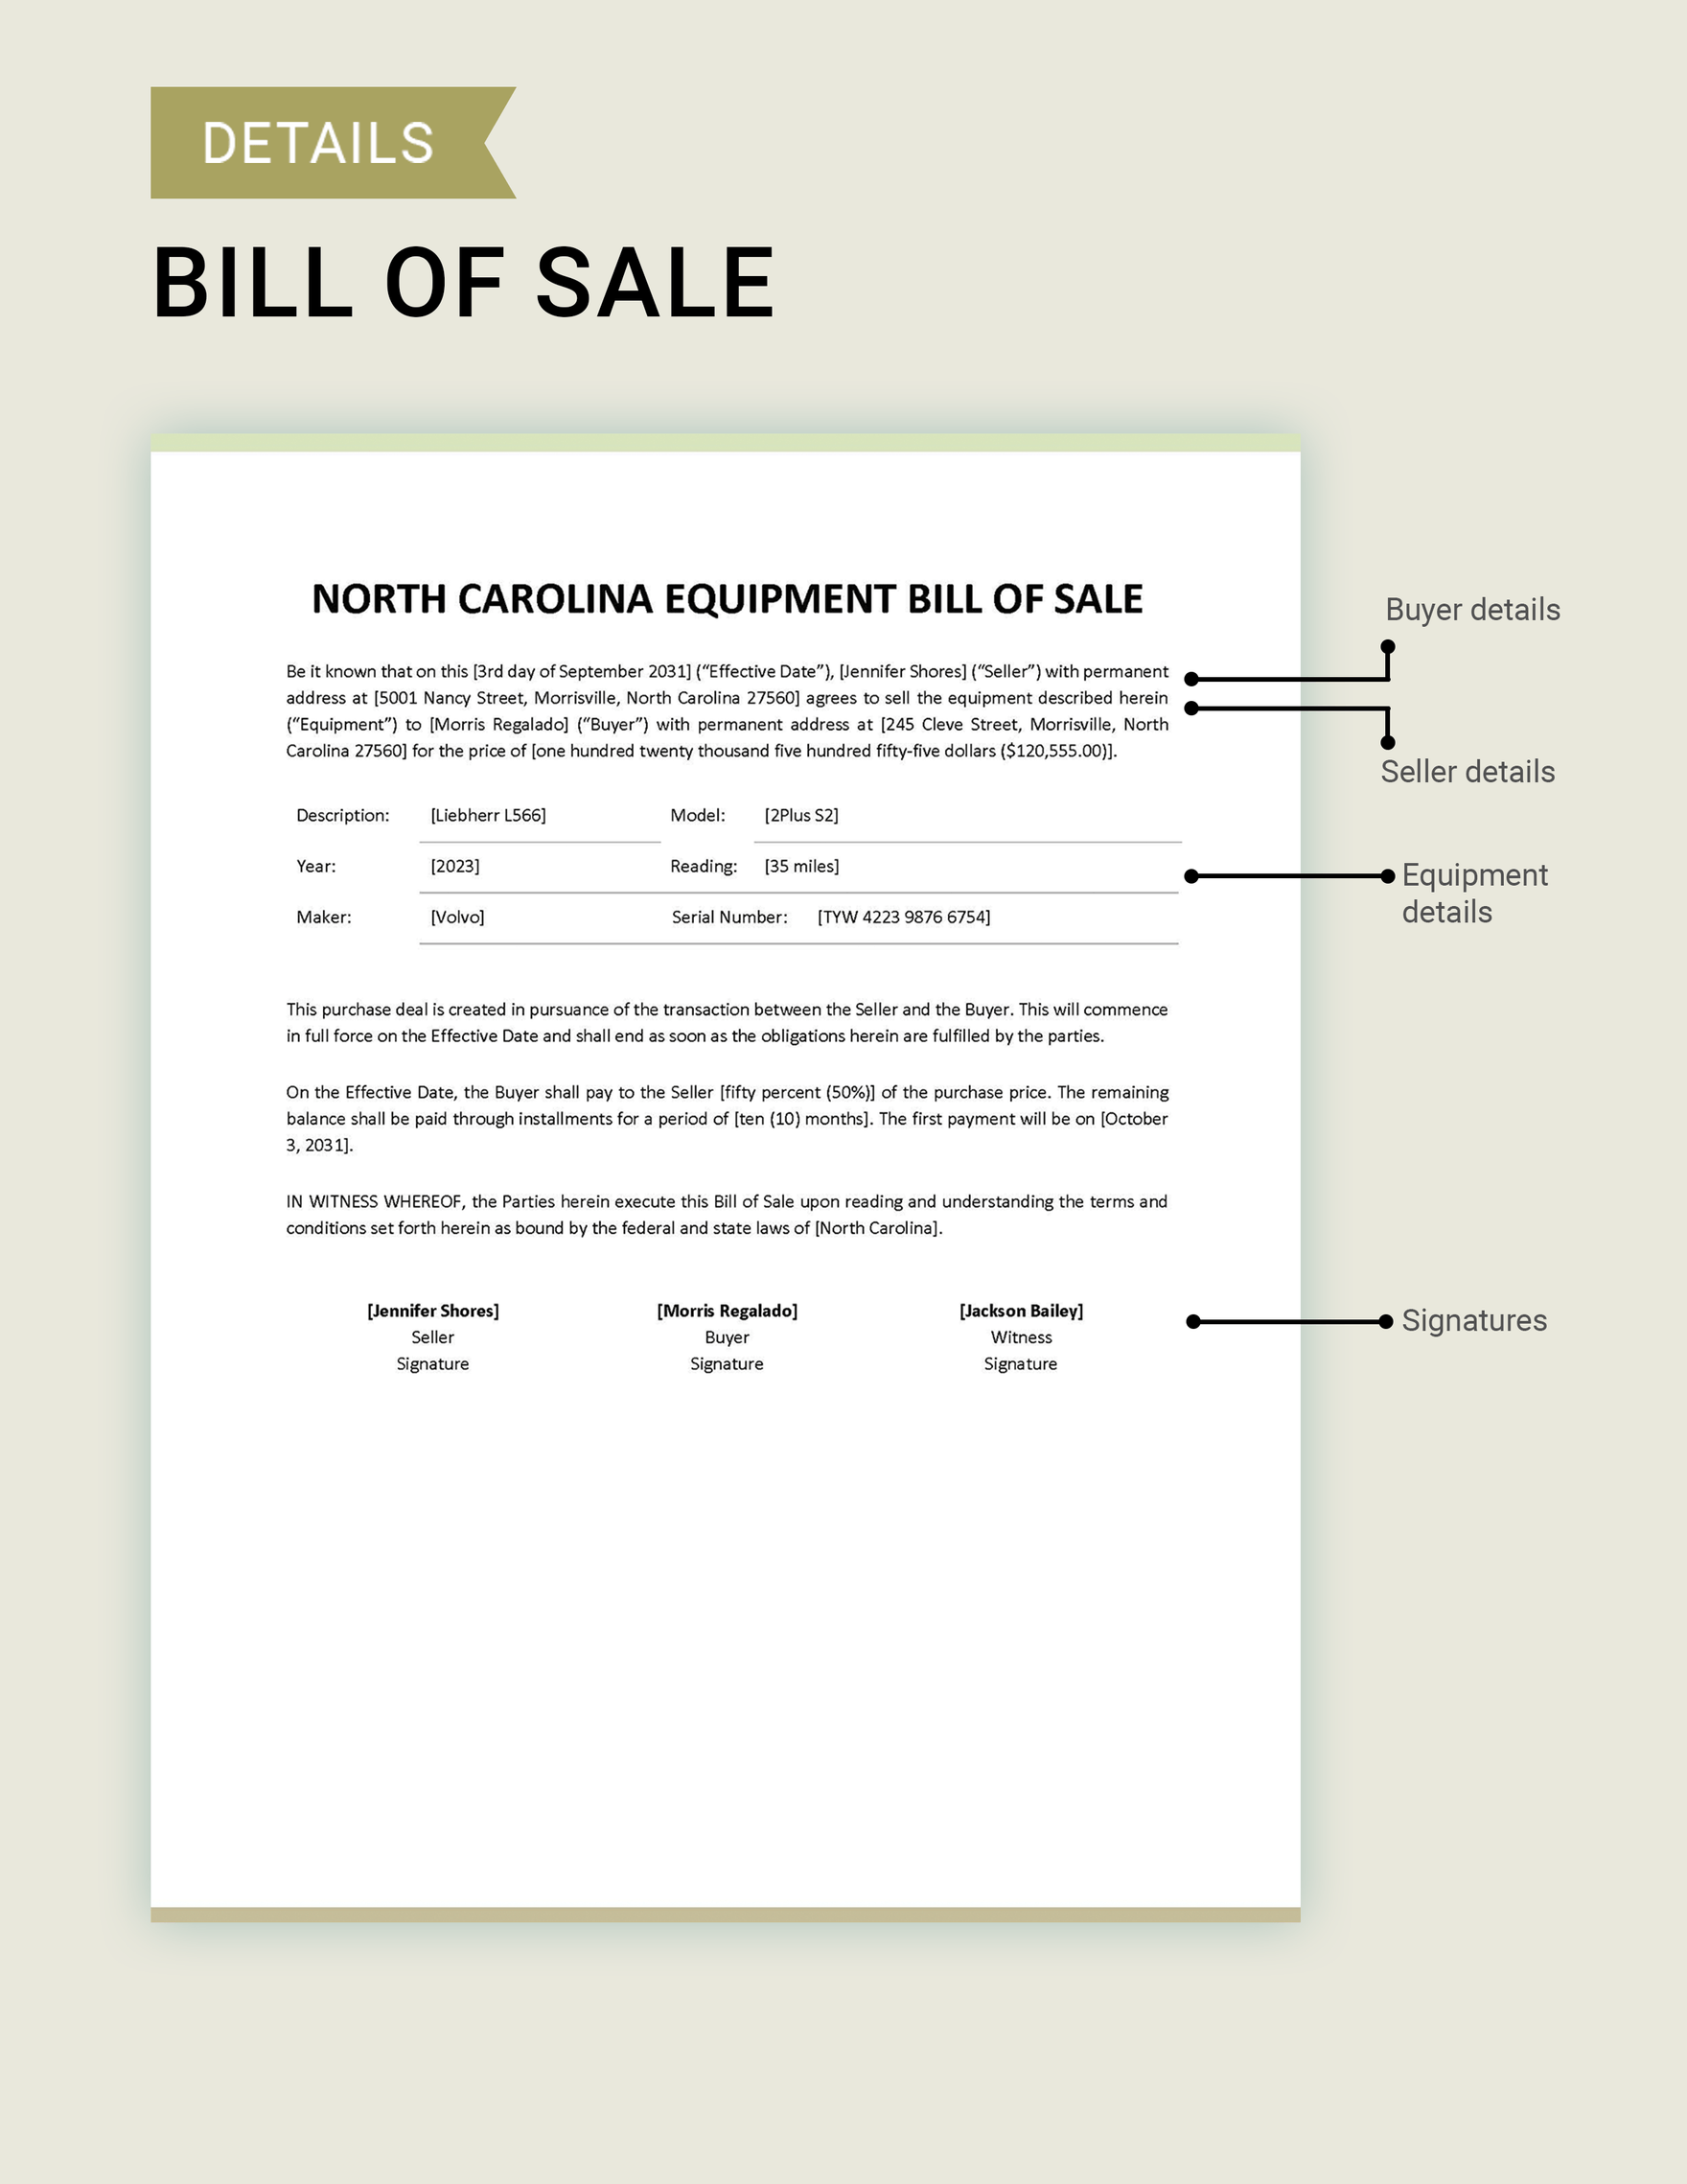 North Carolina Equipment Bill of Sale Template